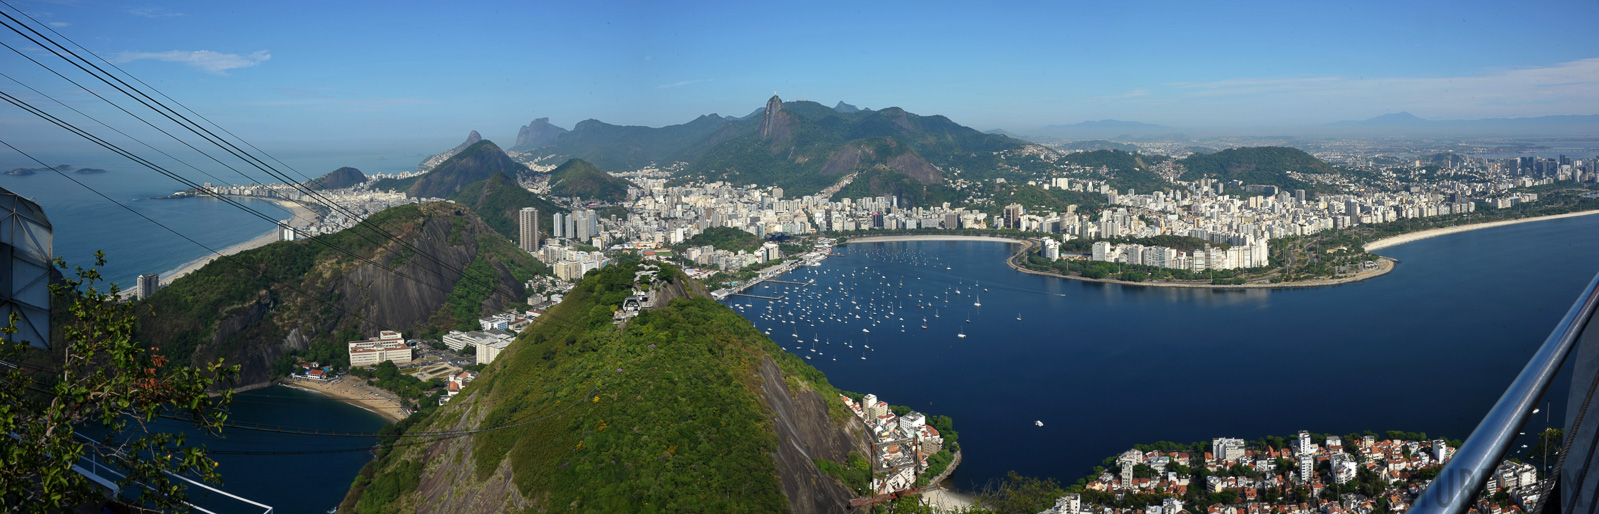 Rio de Janeiro [28 mm, 1/80 Sek. bei f / 18, ISO 200]